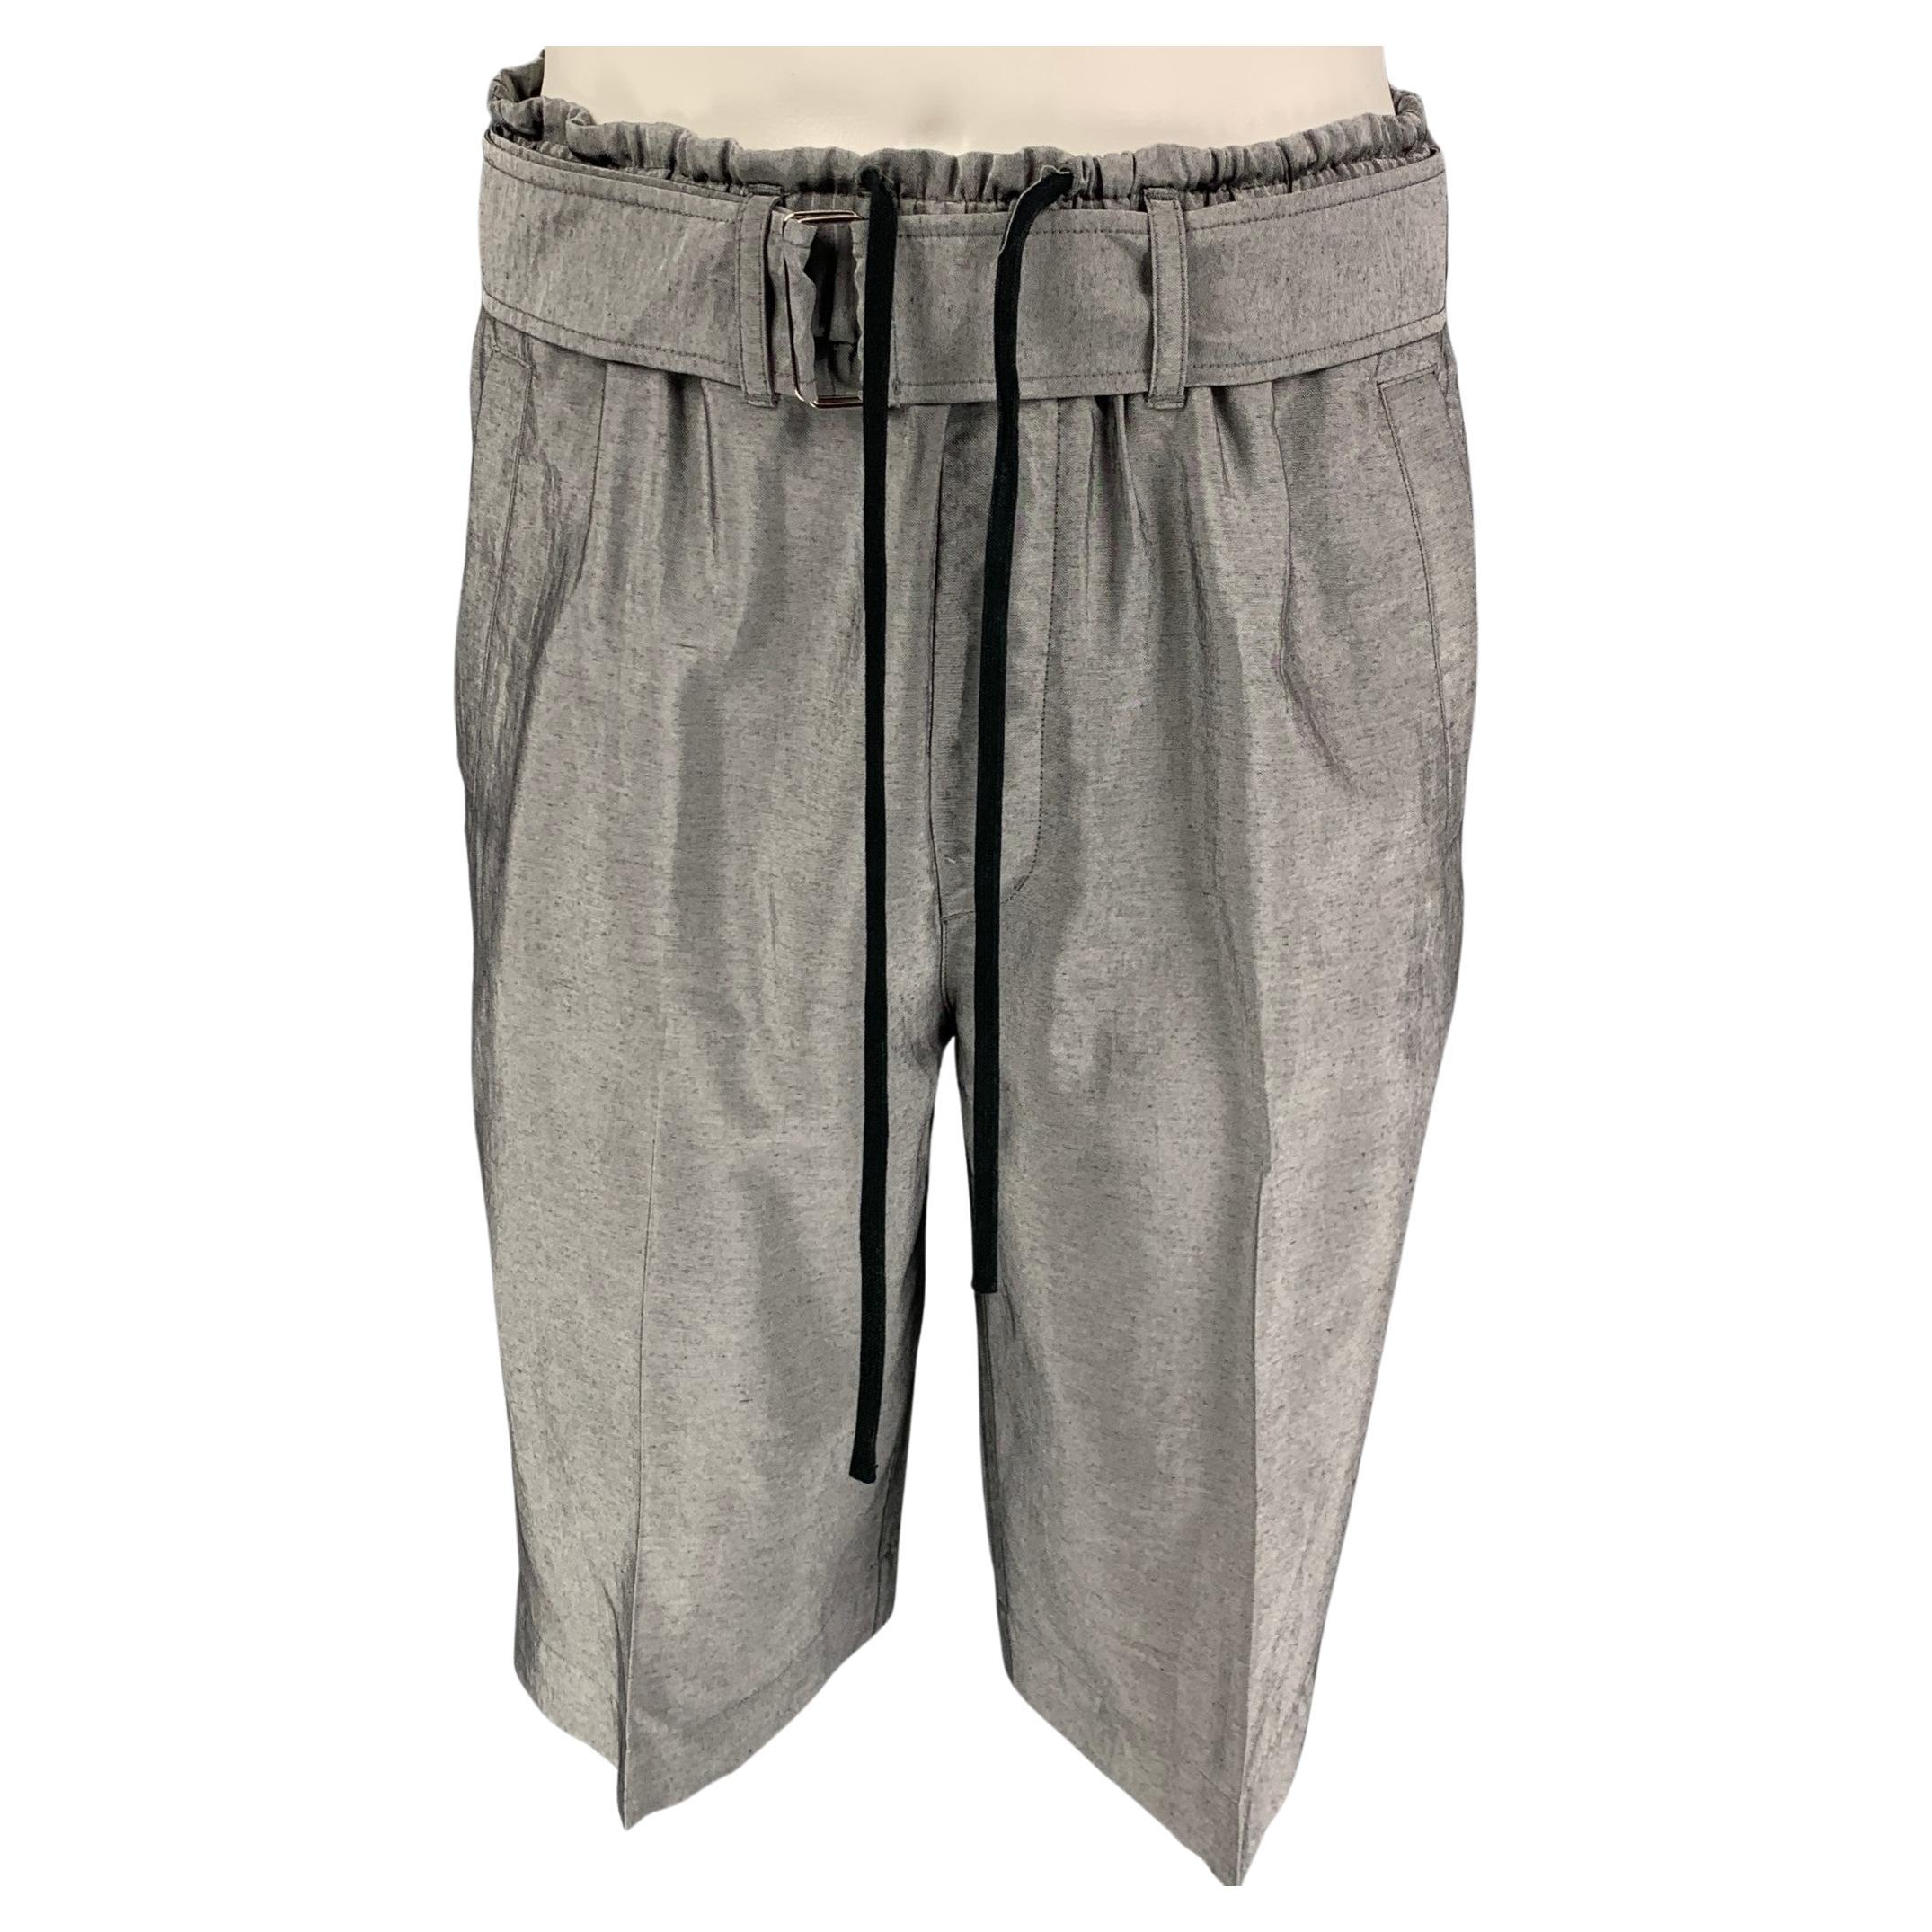 3.1 PHILLIP LIM Size 31 Silver Viscose Blend Belted Shorts